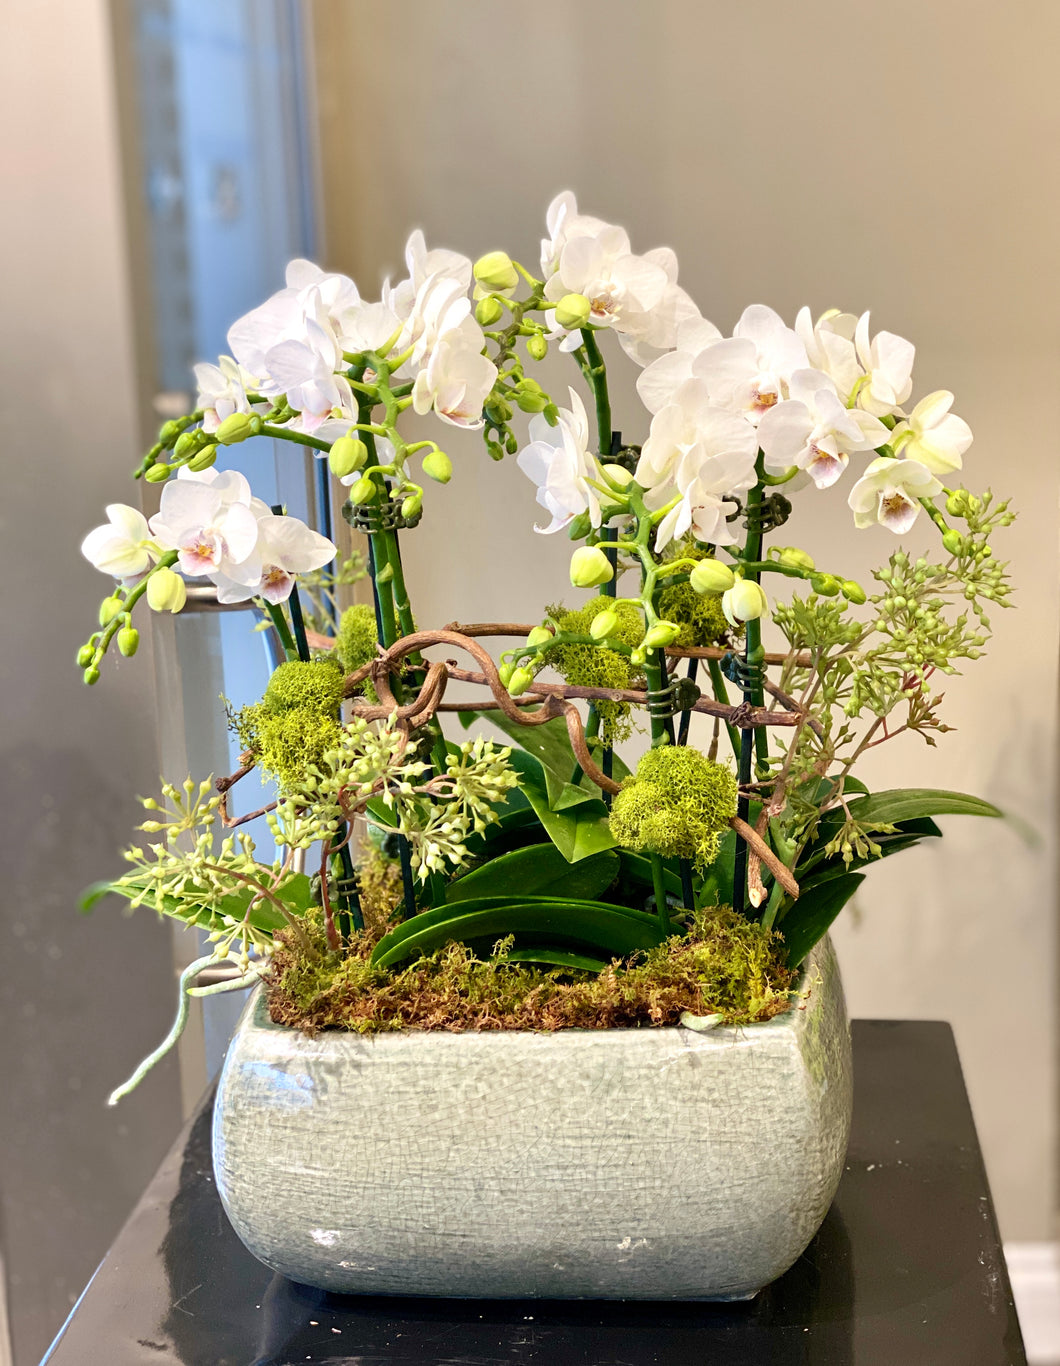 P133 - Lush Mini White Orchid Arrangement in Glazed Ceramic Planter